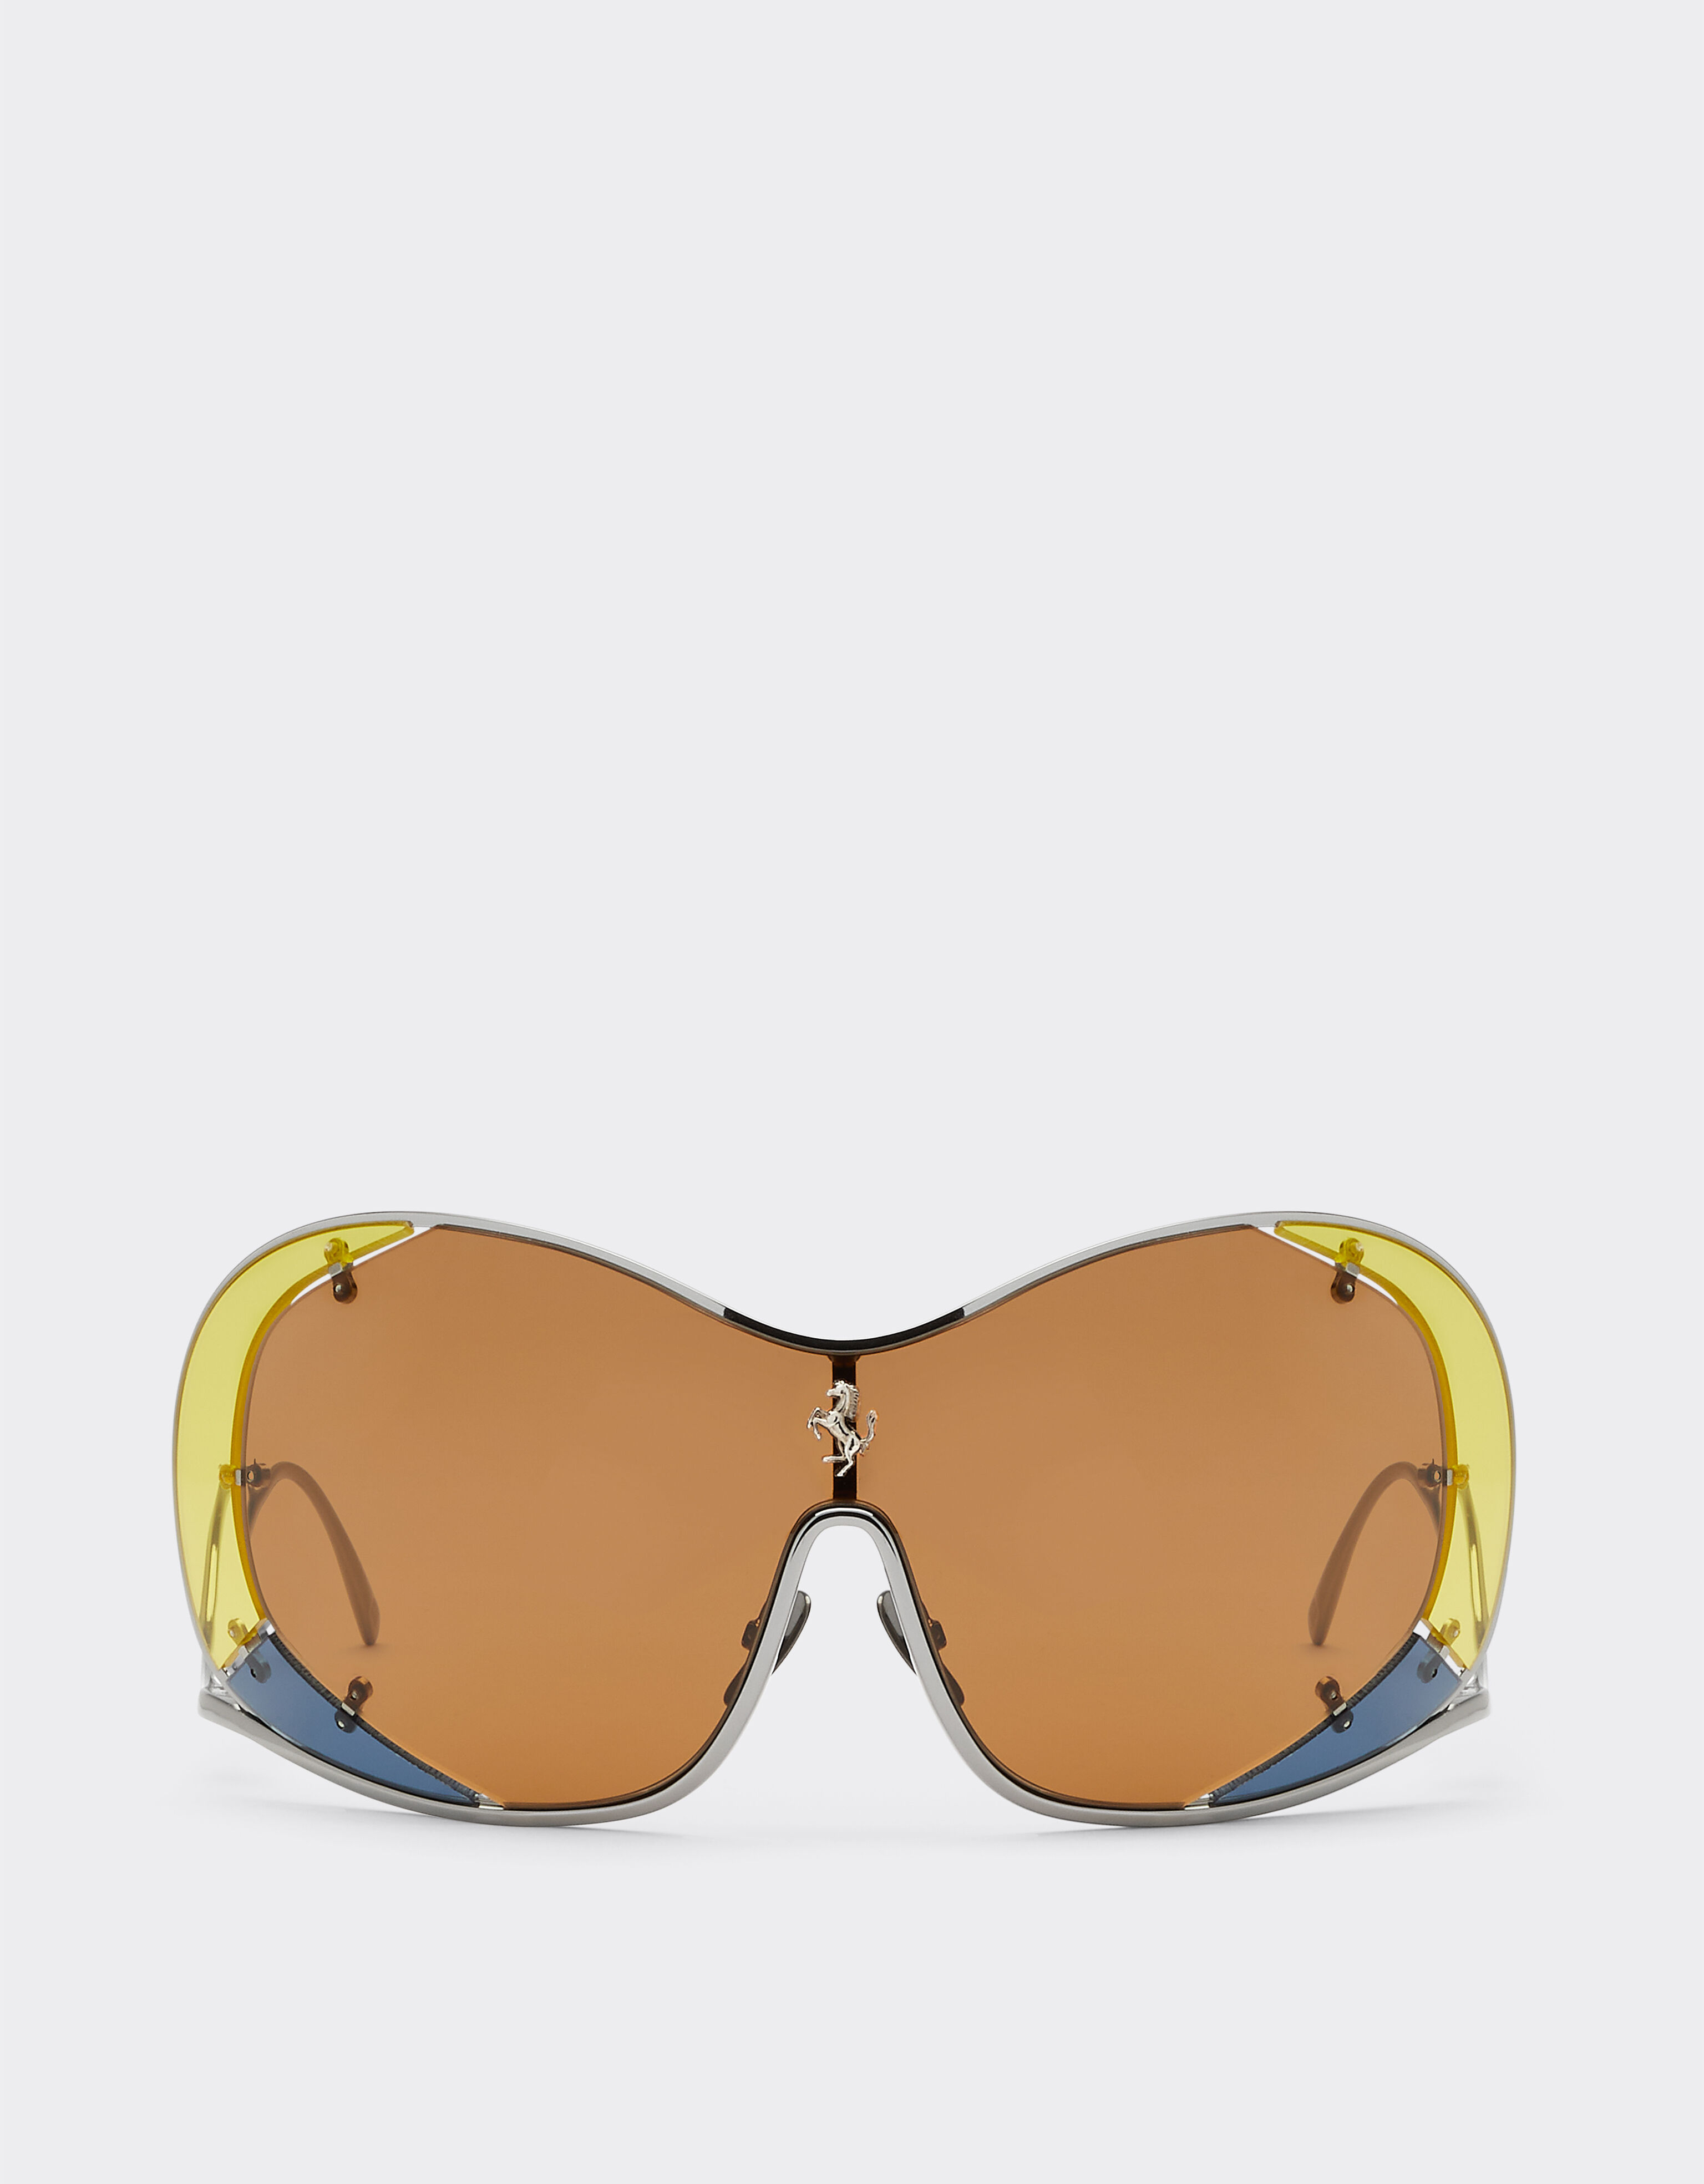 Ferrari Ferrari sunglasses with brown lenses Dark Grey F0638f